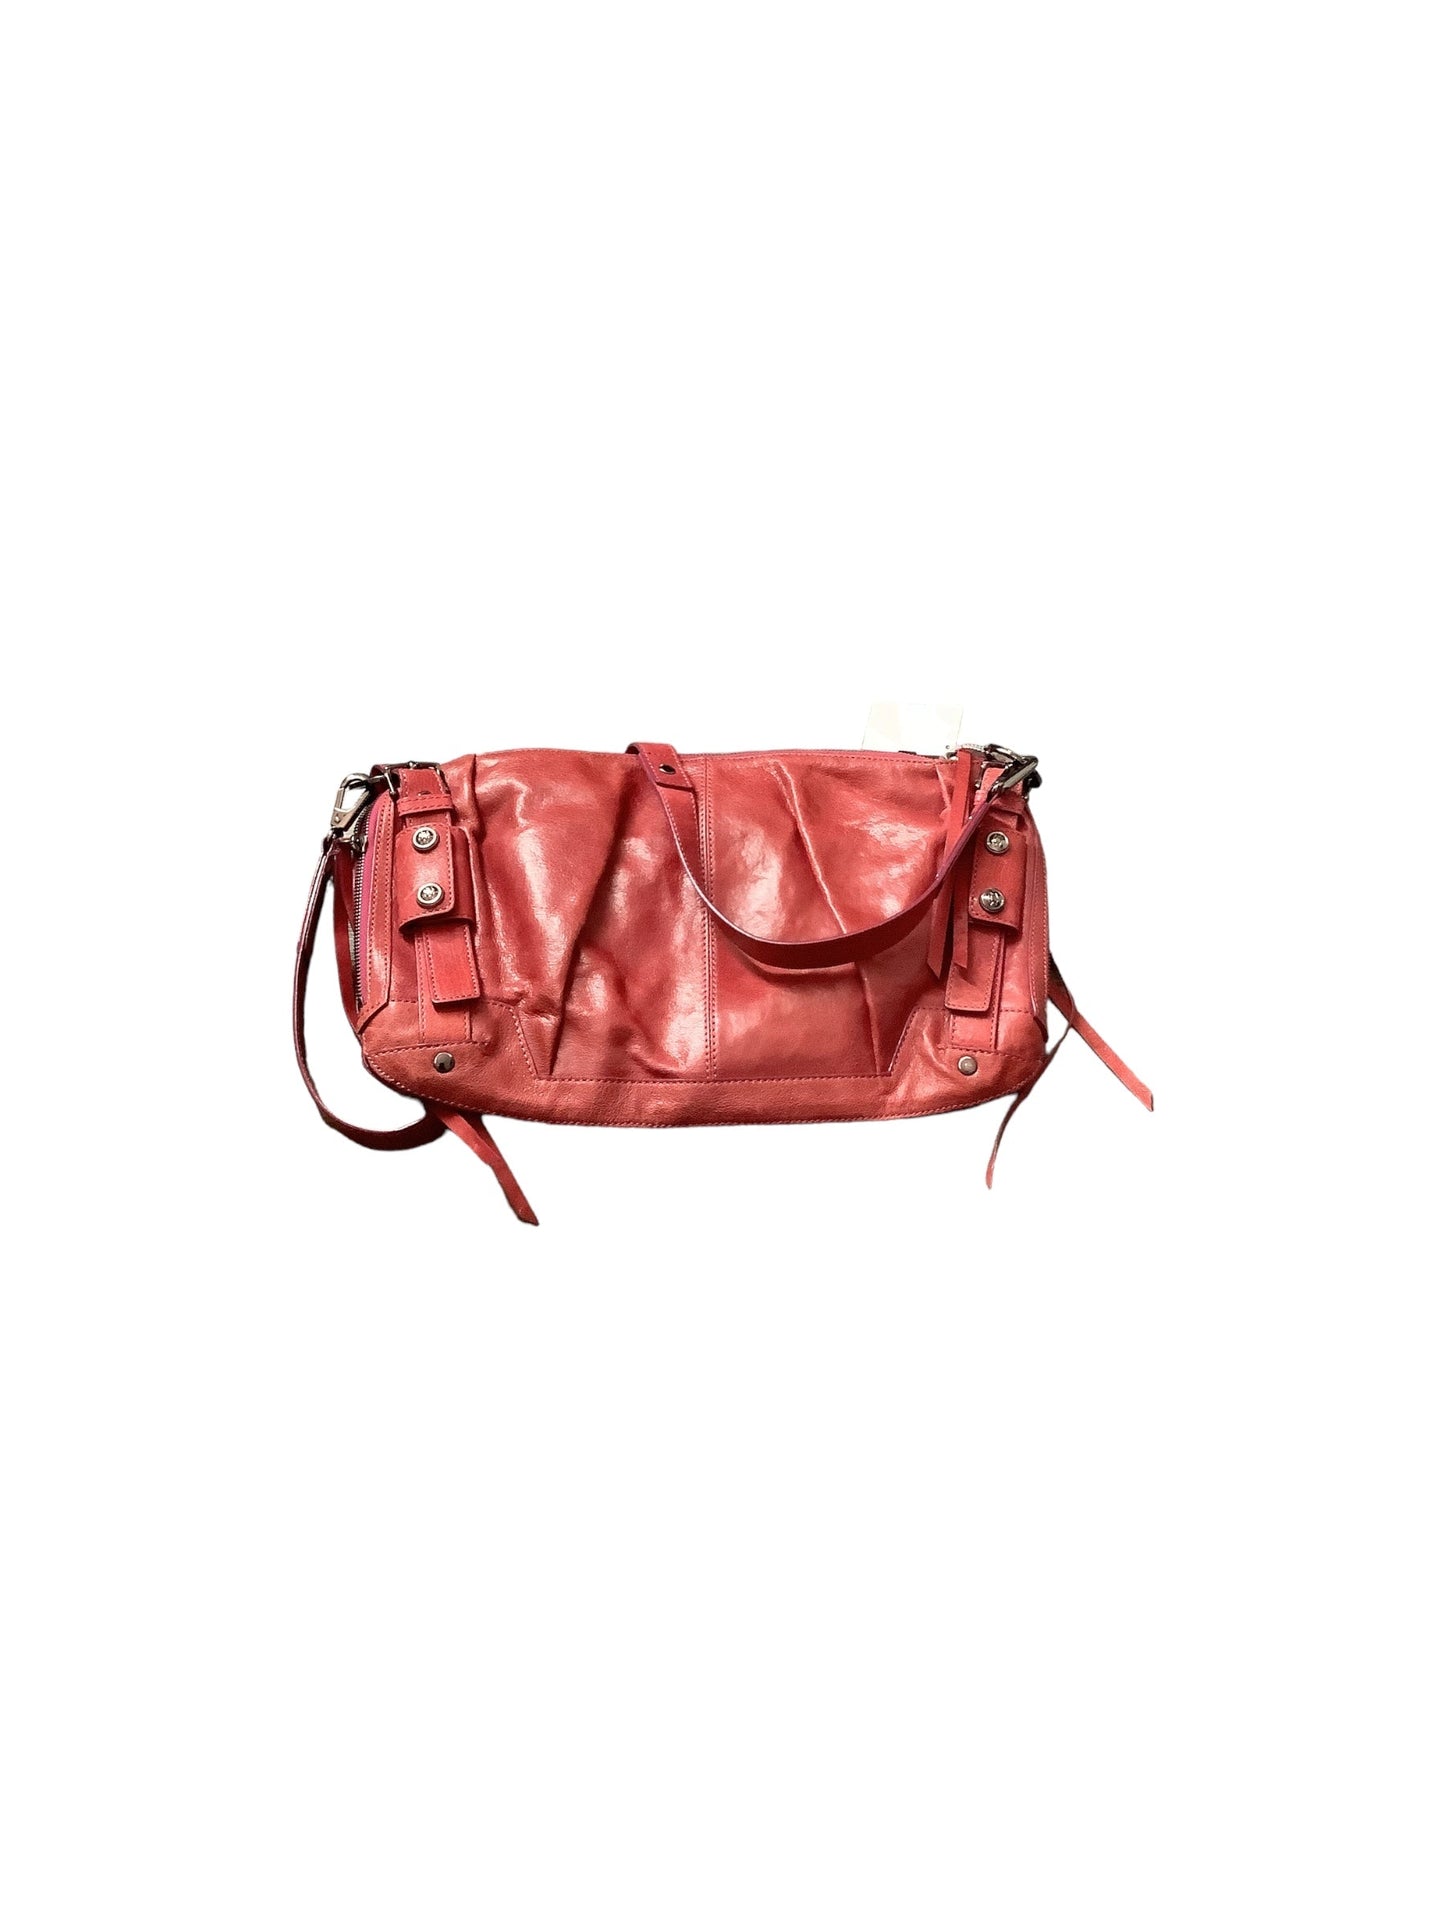 Handbag Leather Michele, Size Medium